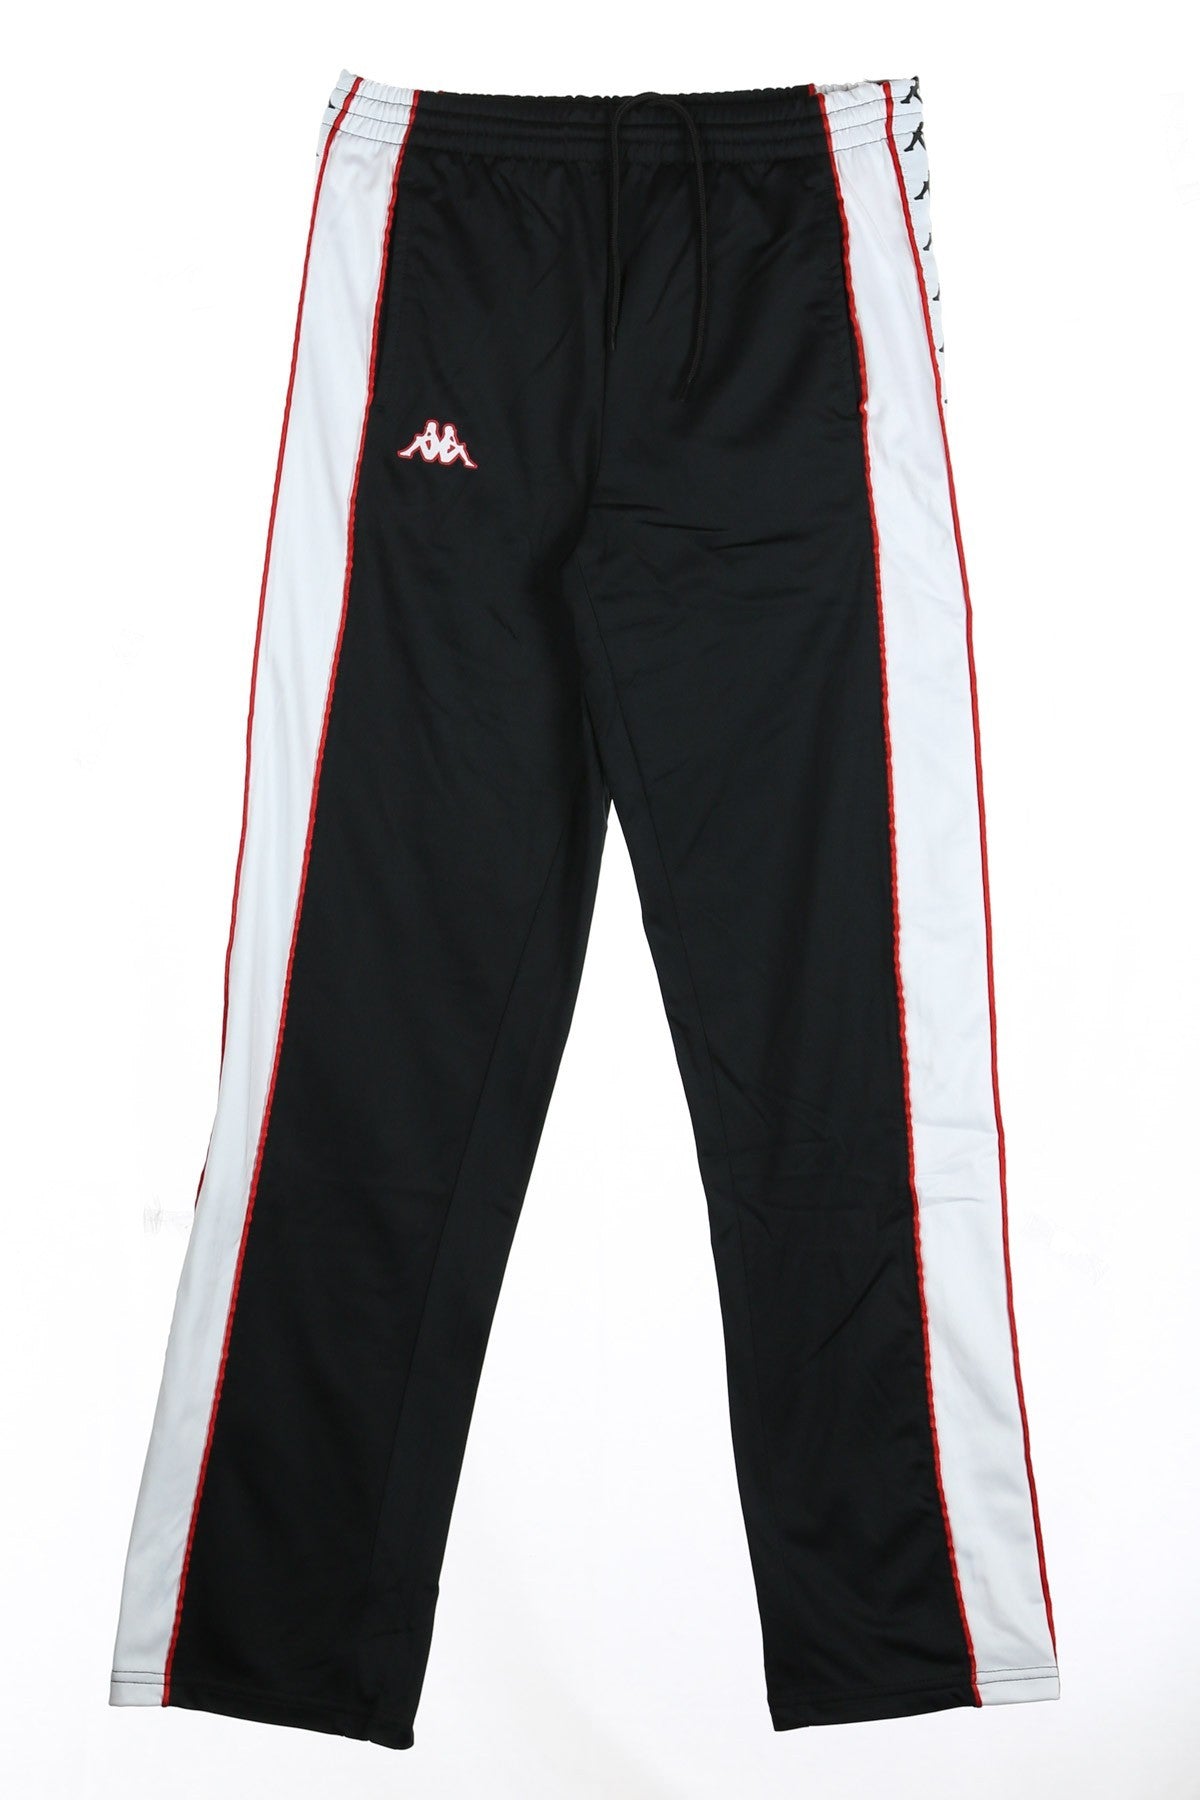 Banda Big Bay Men's Tracksuit Pants Black/white/red